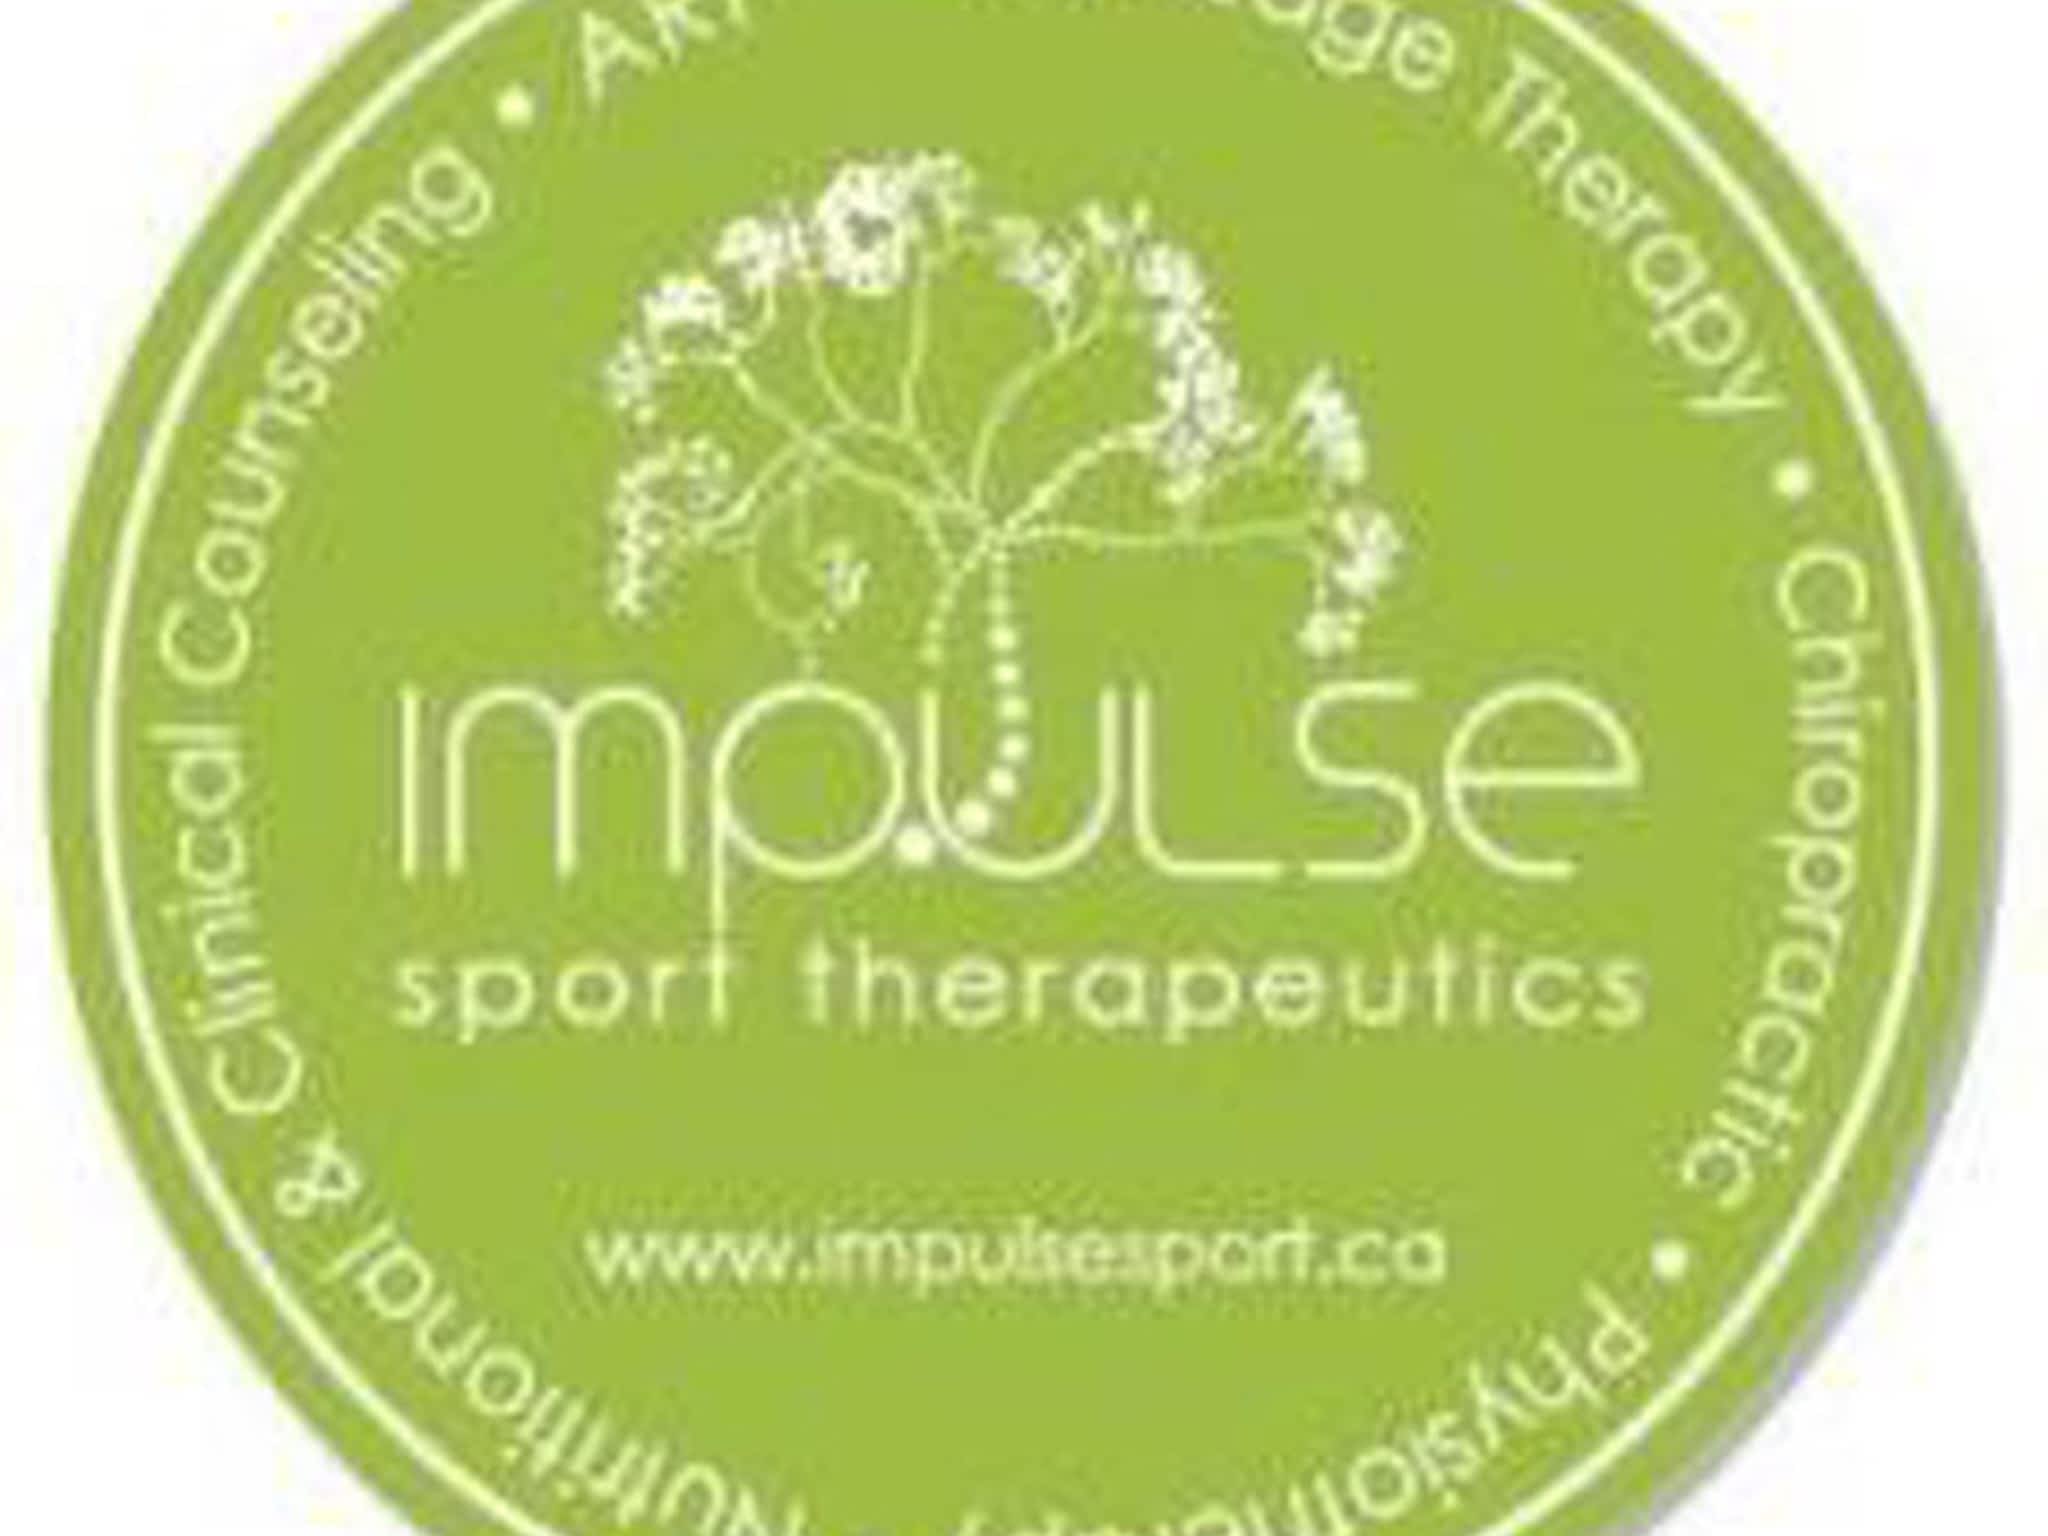 photo Impulse Sport Therapeutics